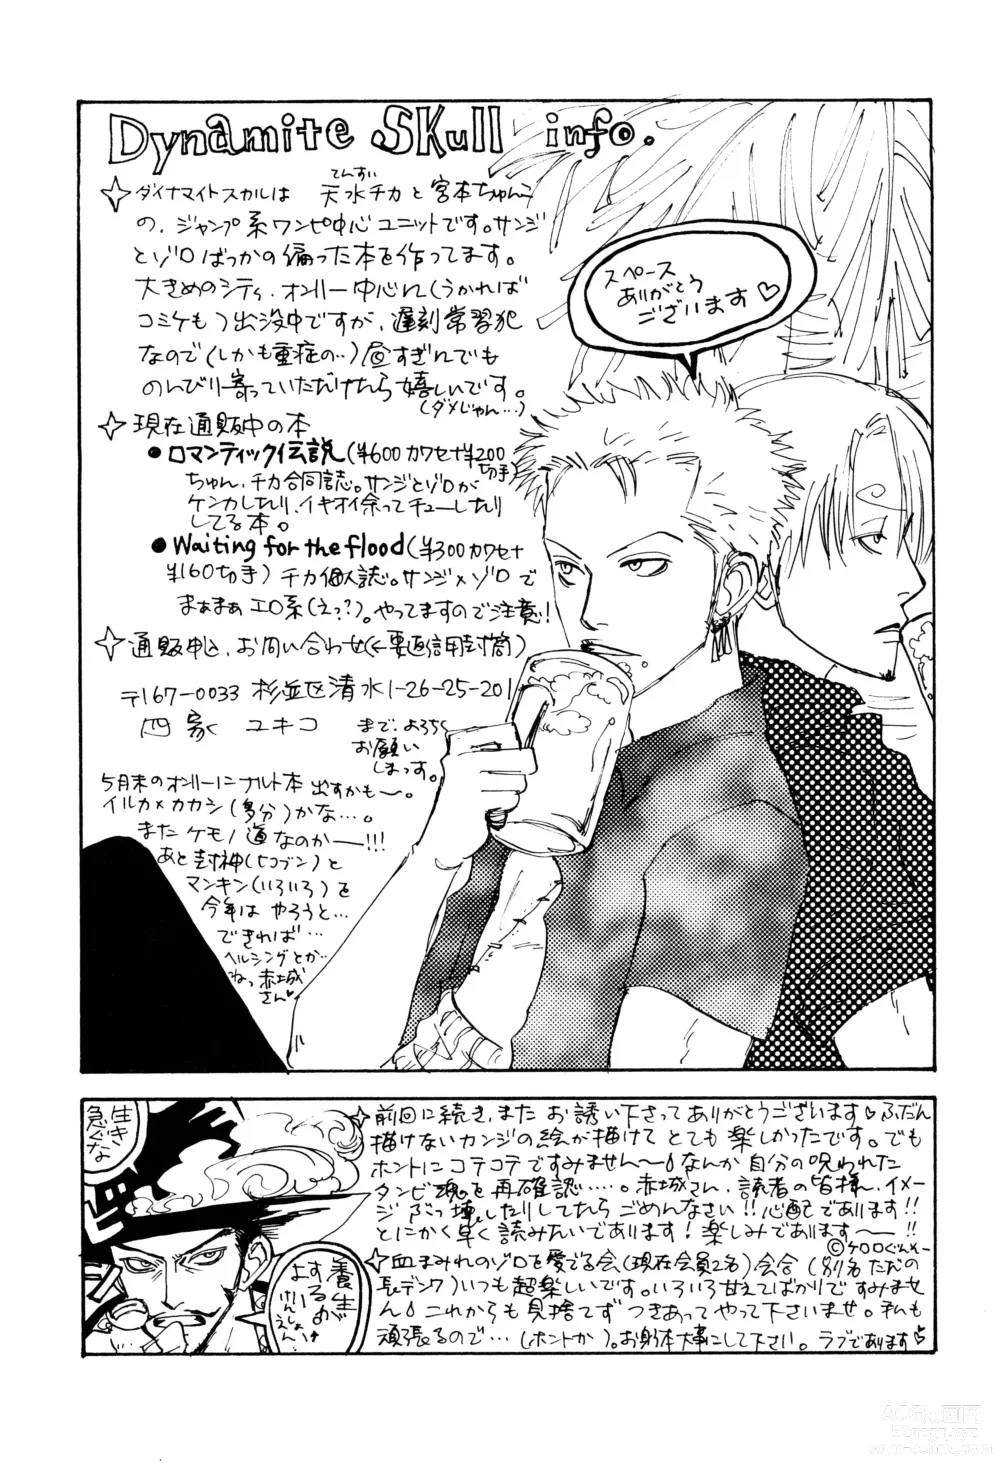 Page 86 of doujinshi SWORD DANCER